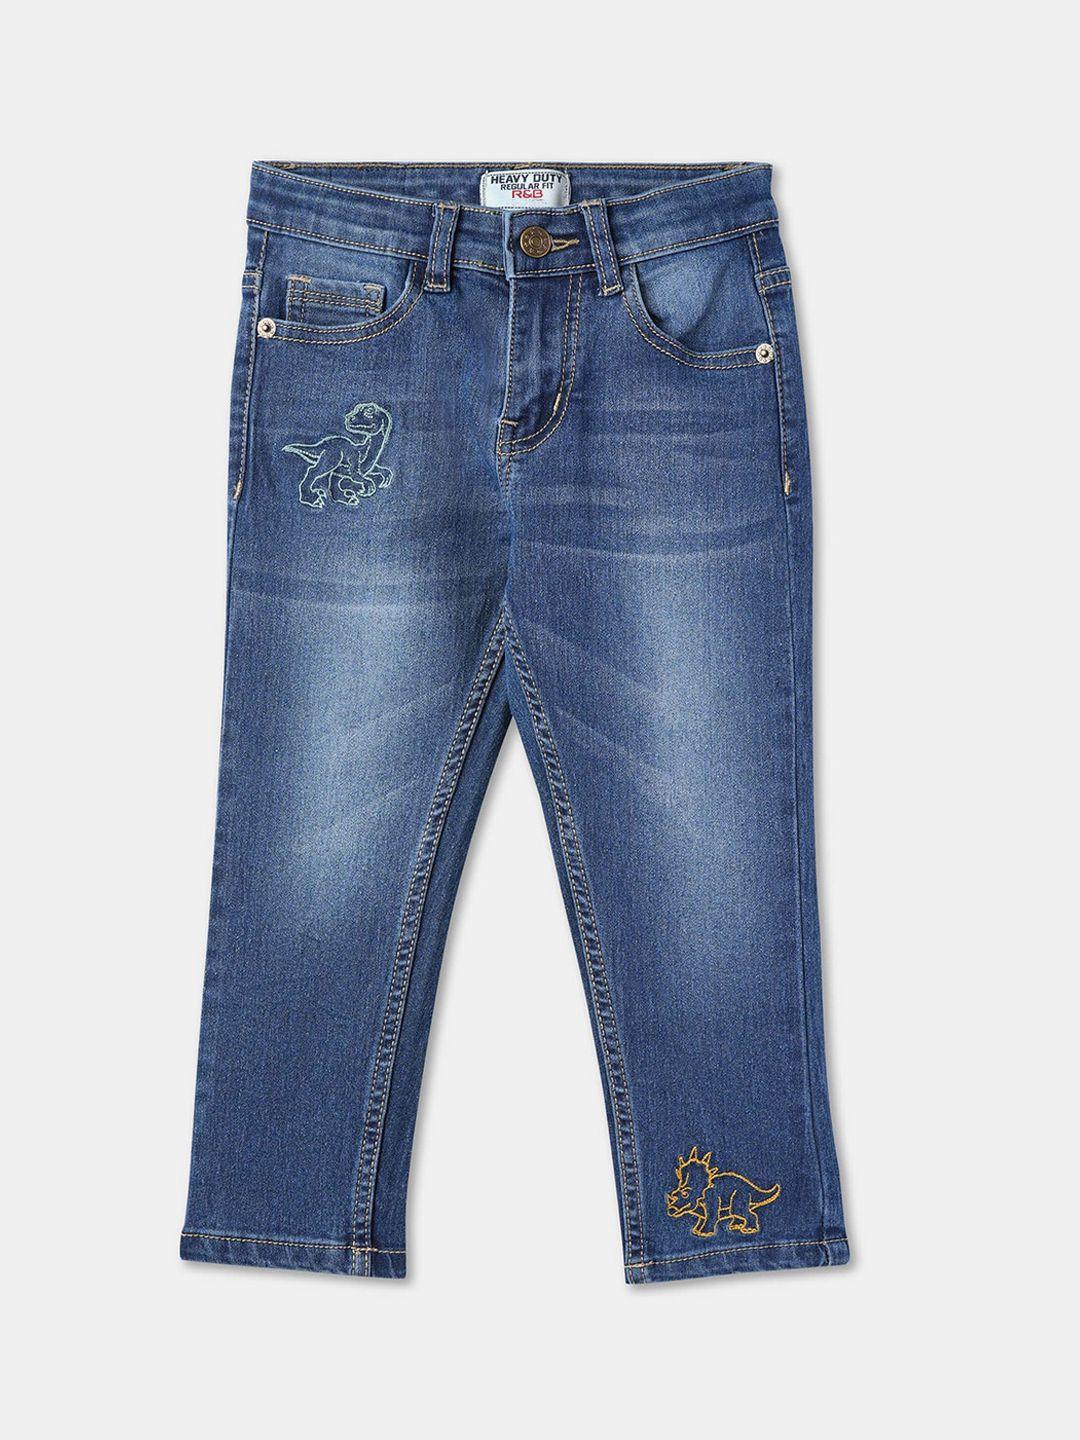 r&b-boys-blue-mid-rise-regular-fit-light-fade-jeans